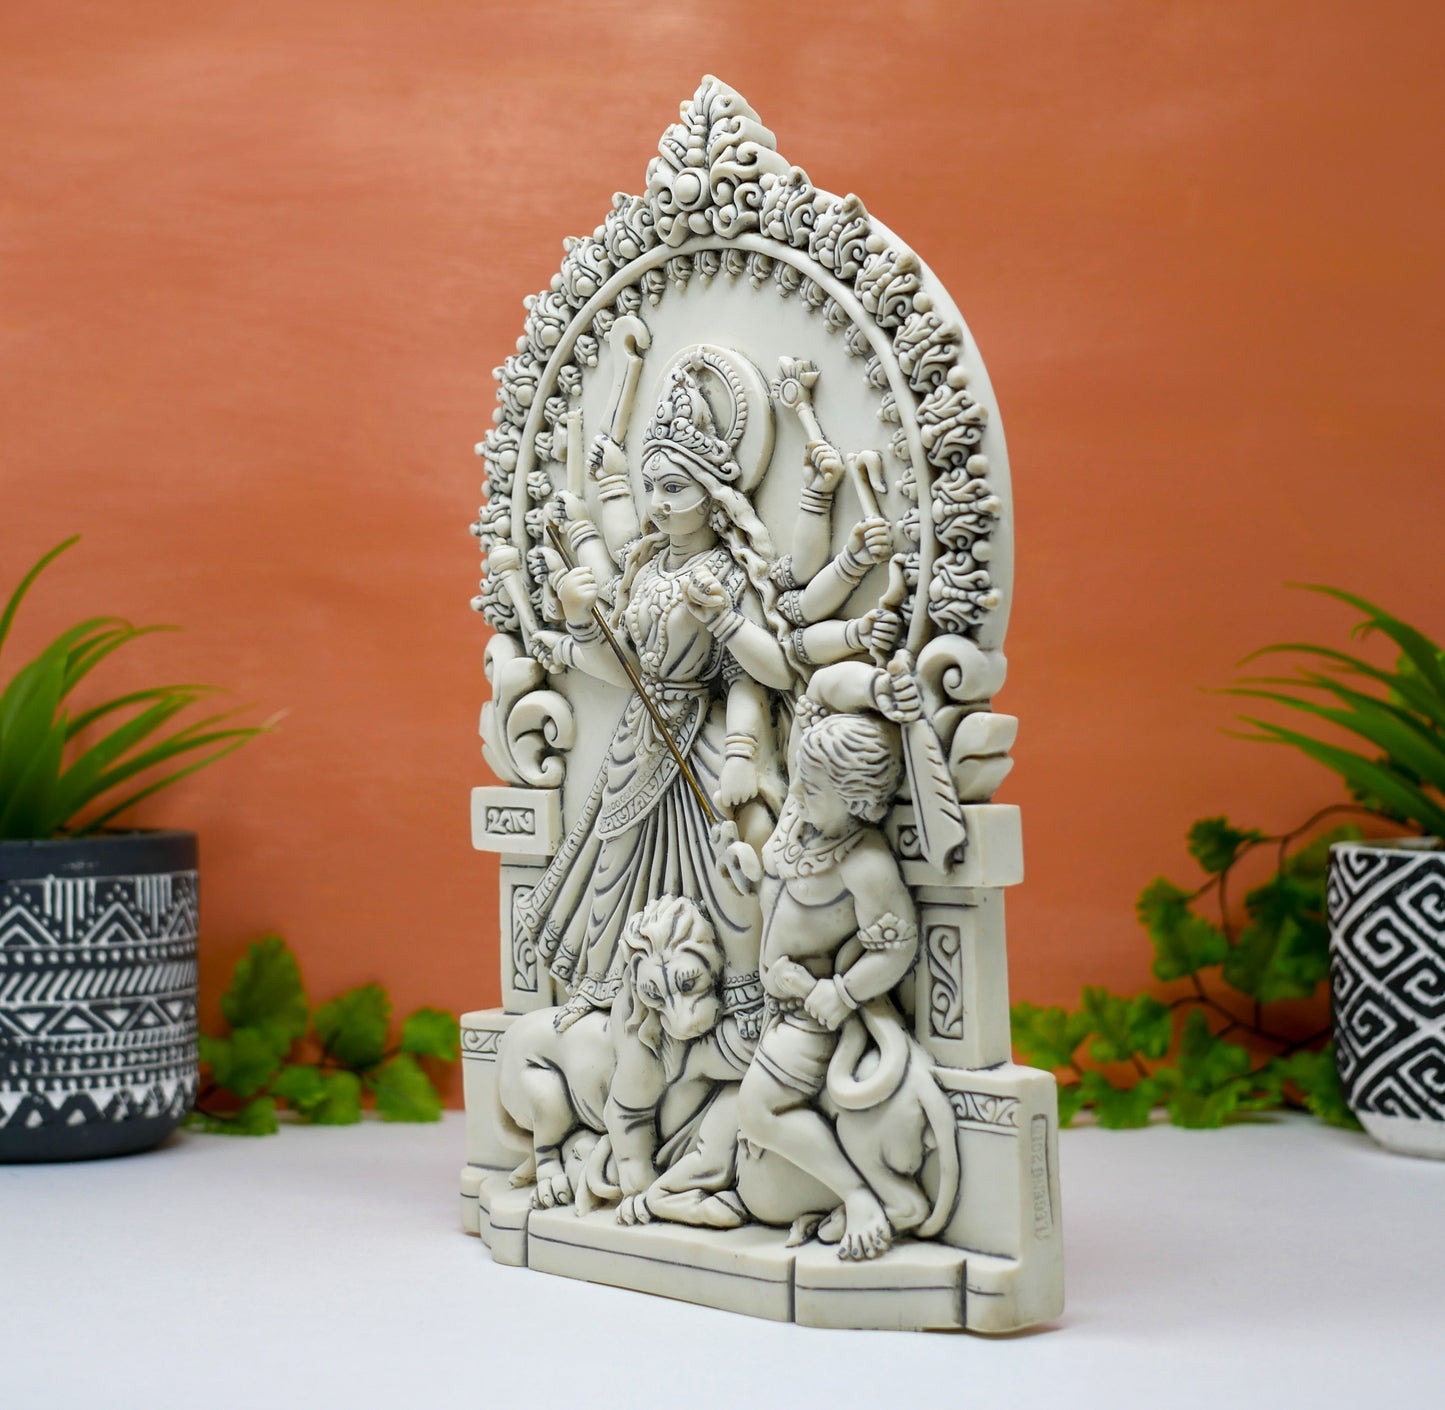 Mata Durga Hindu Warrior Goddess Wall Hanging Plaque - Handmade Gifts 10.25"